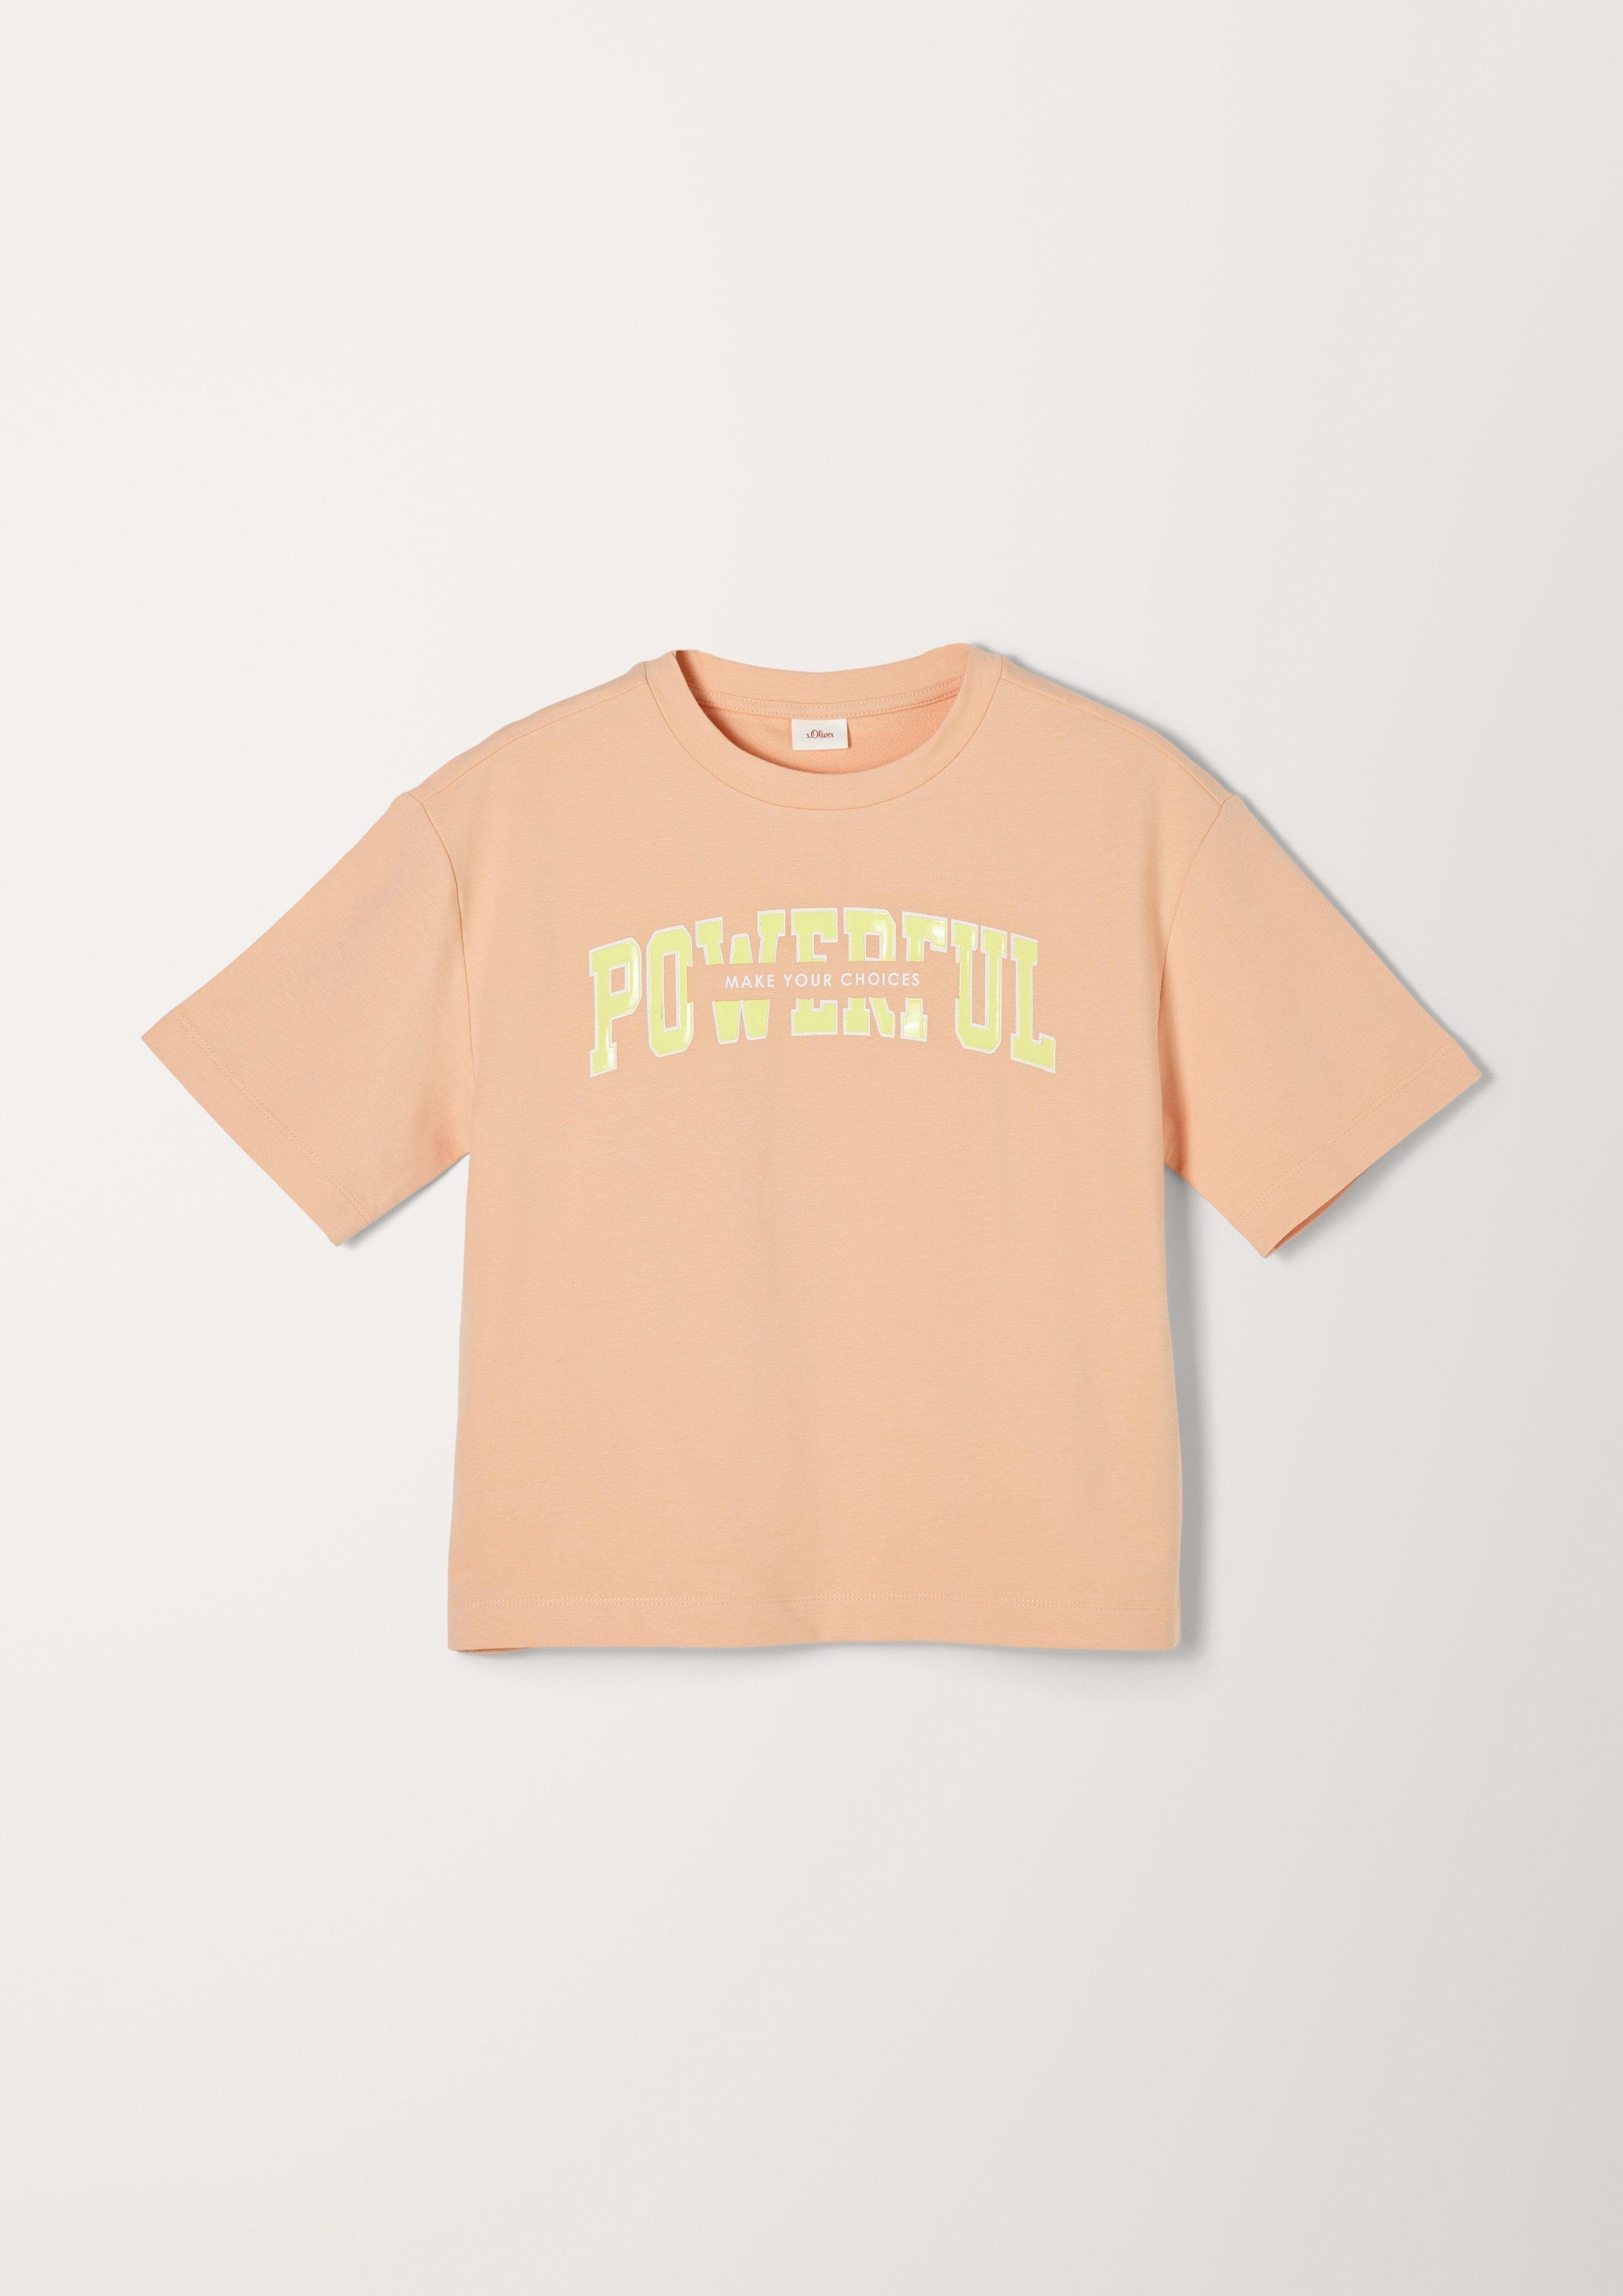 Statementprint mit peach T-Shirt Kurzarmshirt s.Oliver